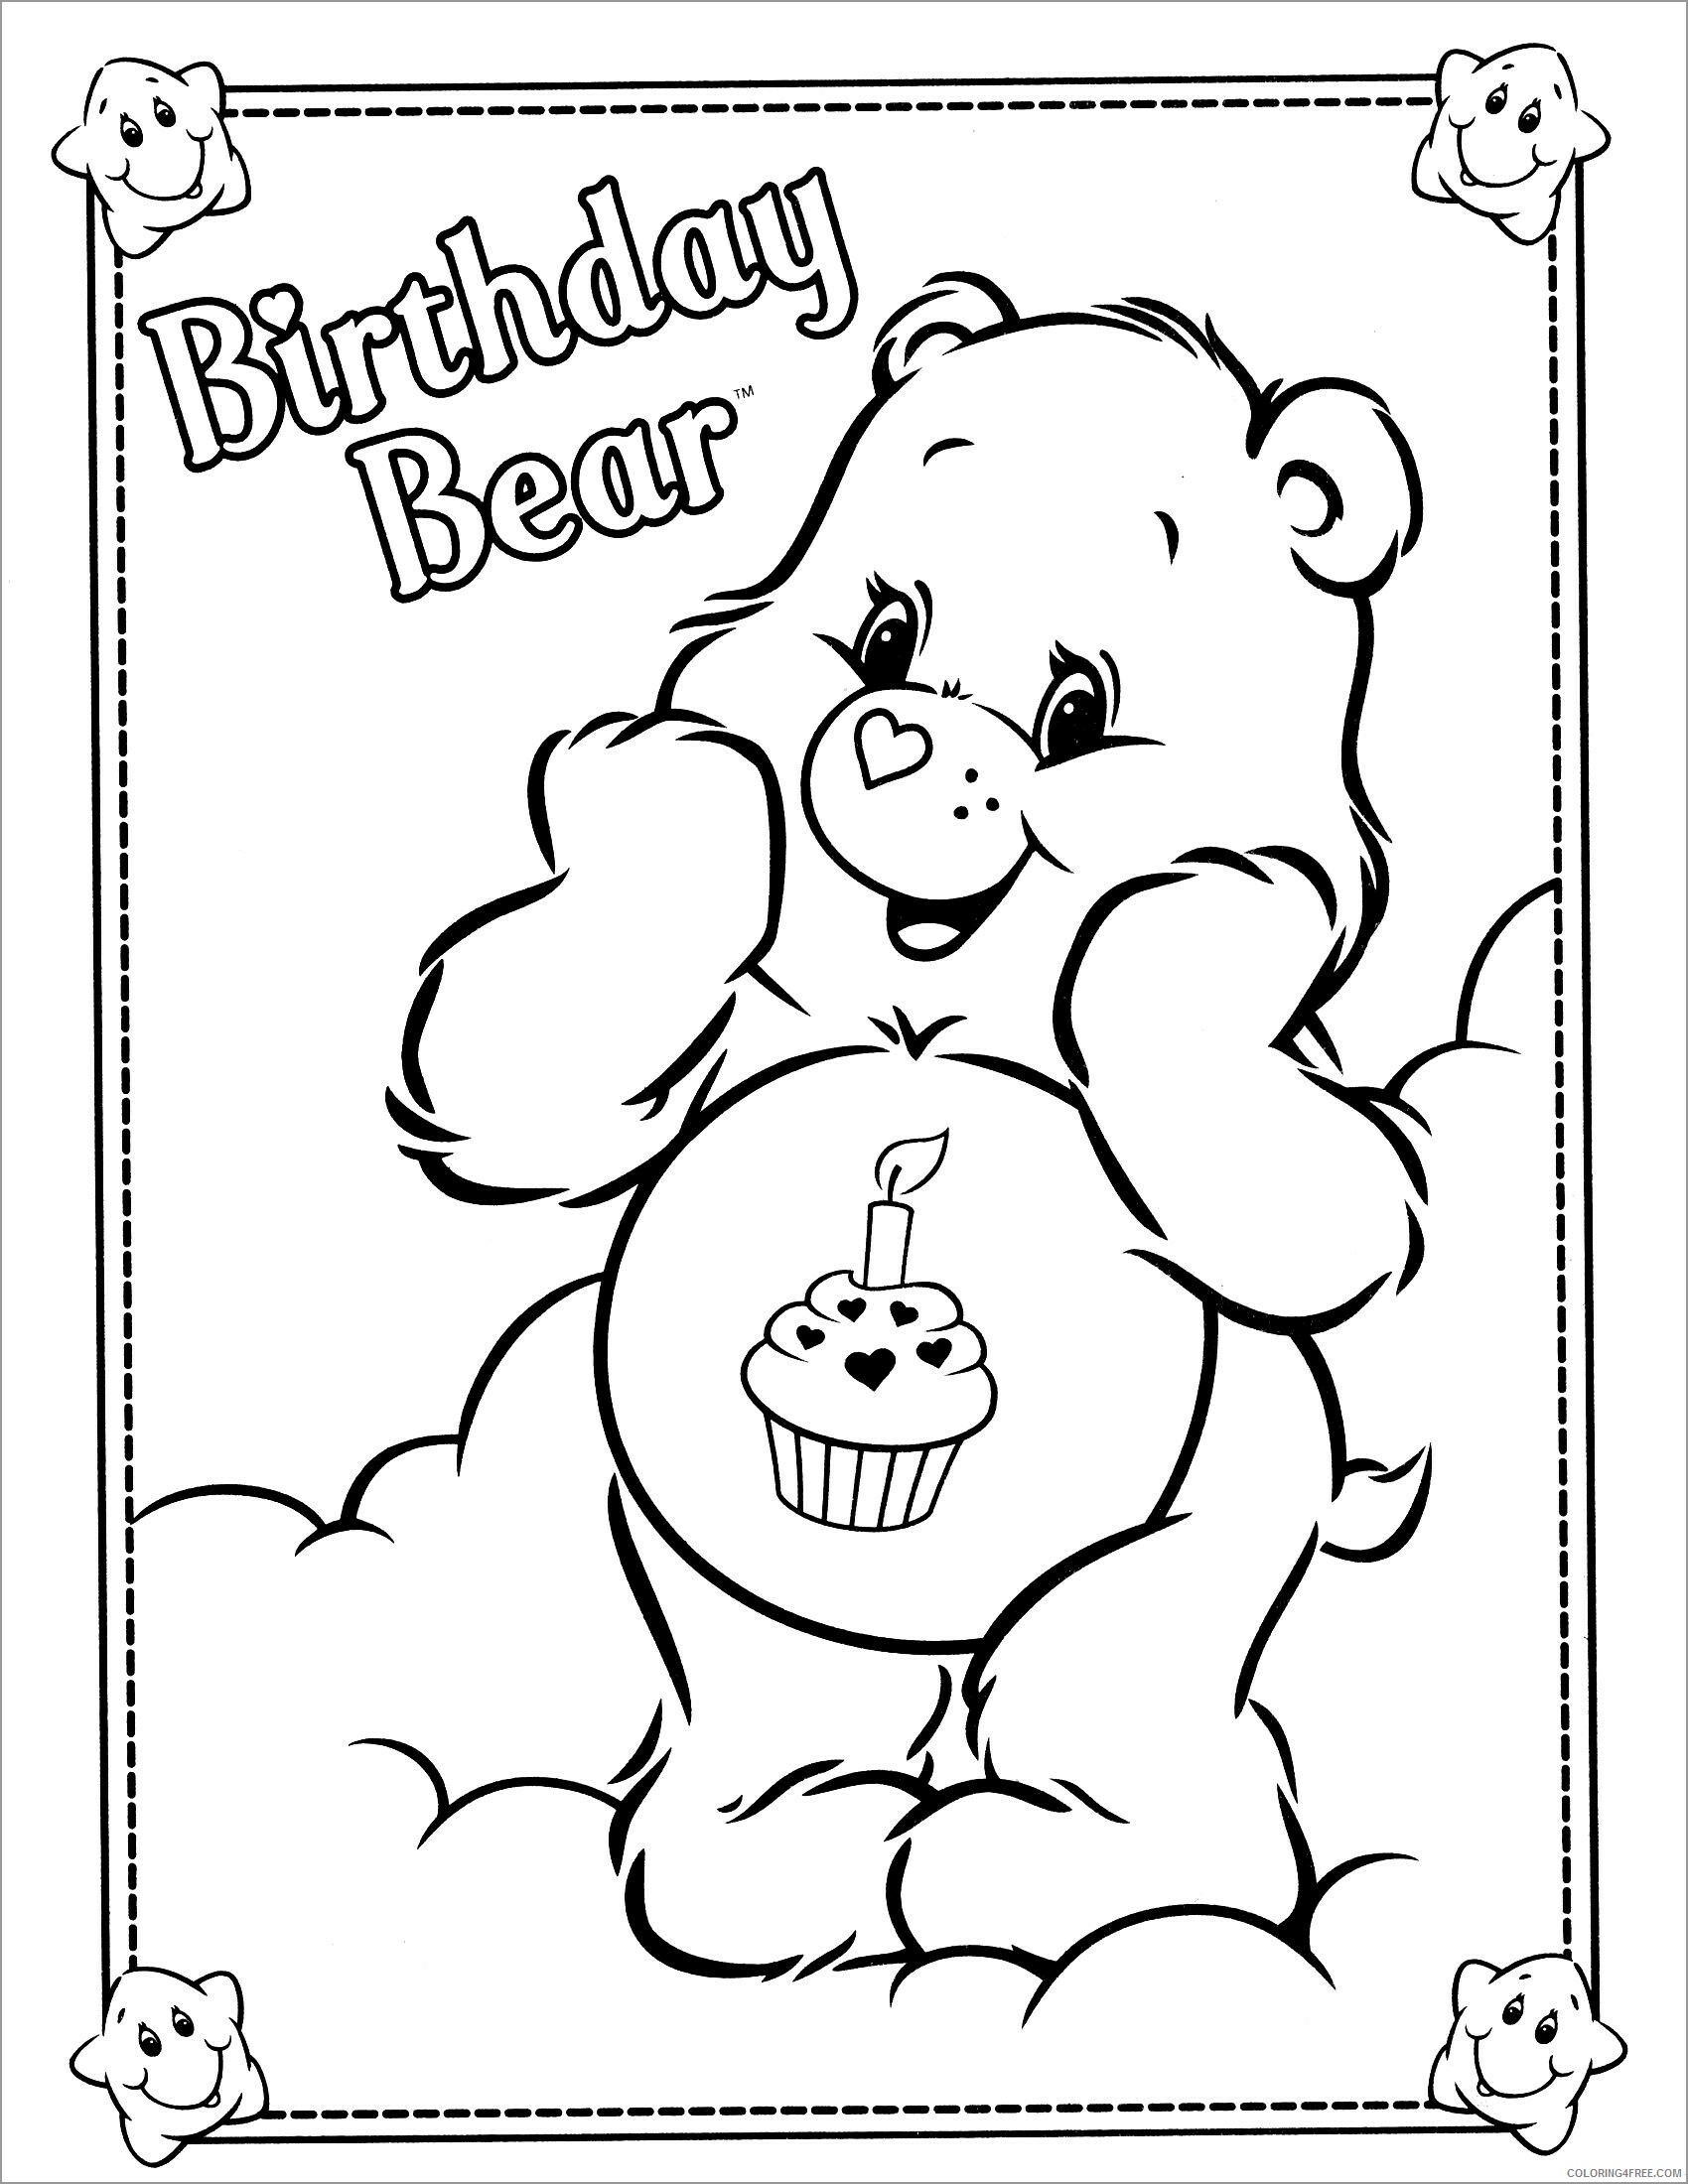 Bear Coloring Pages Animal Printable Sheets birthday bear 2021 0274 Coloring4free